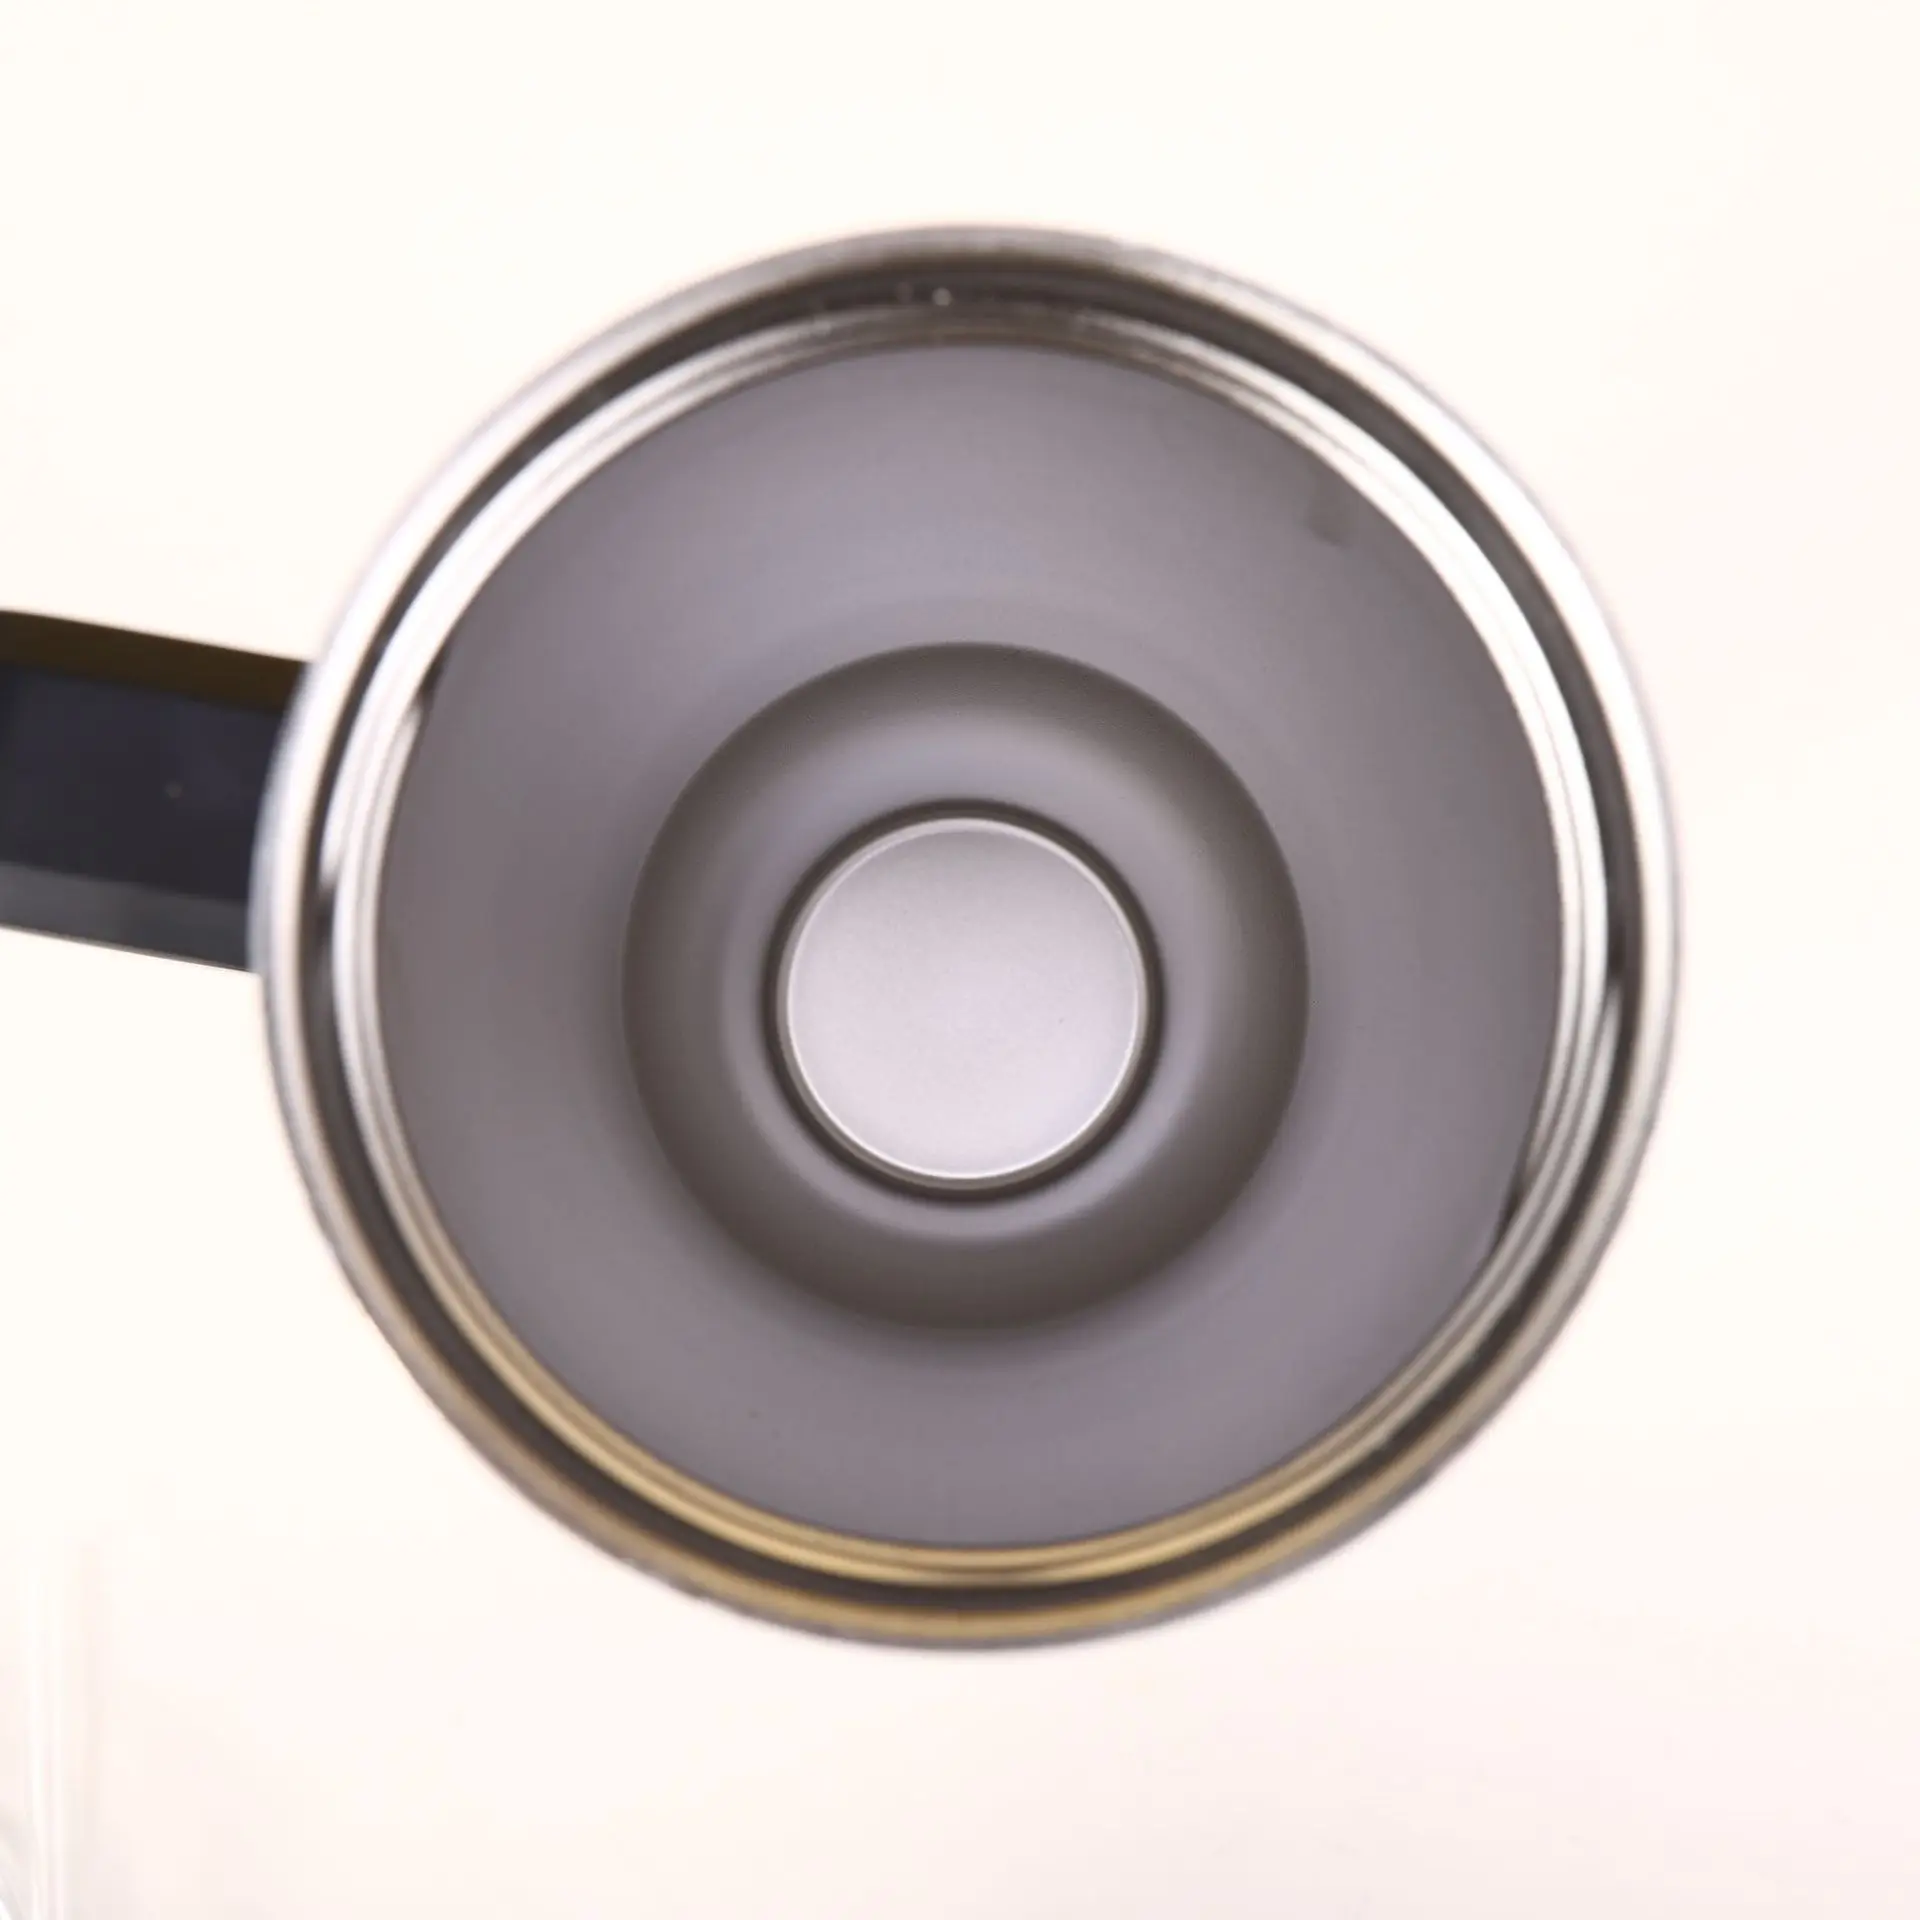 40oz stainless steel custom travel coffee mug Smart Wireless Sublimation Blanks Music Speaker Tumbler With bluetooth